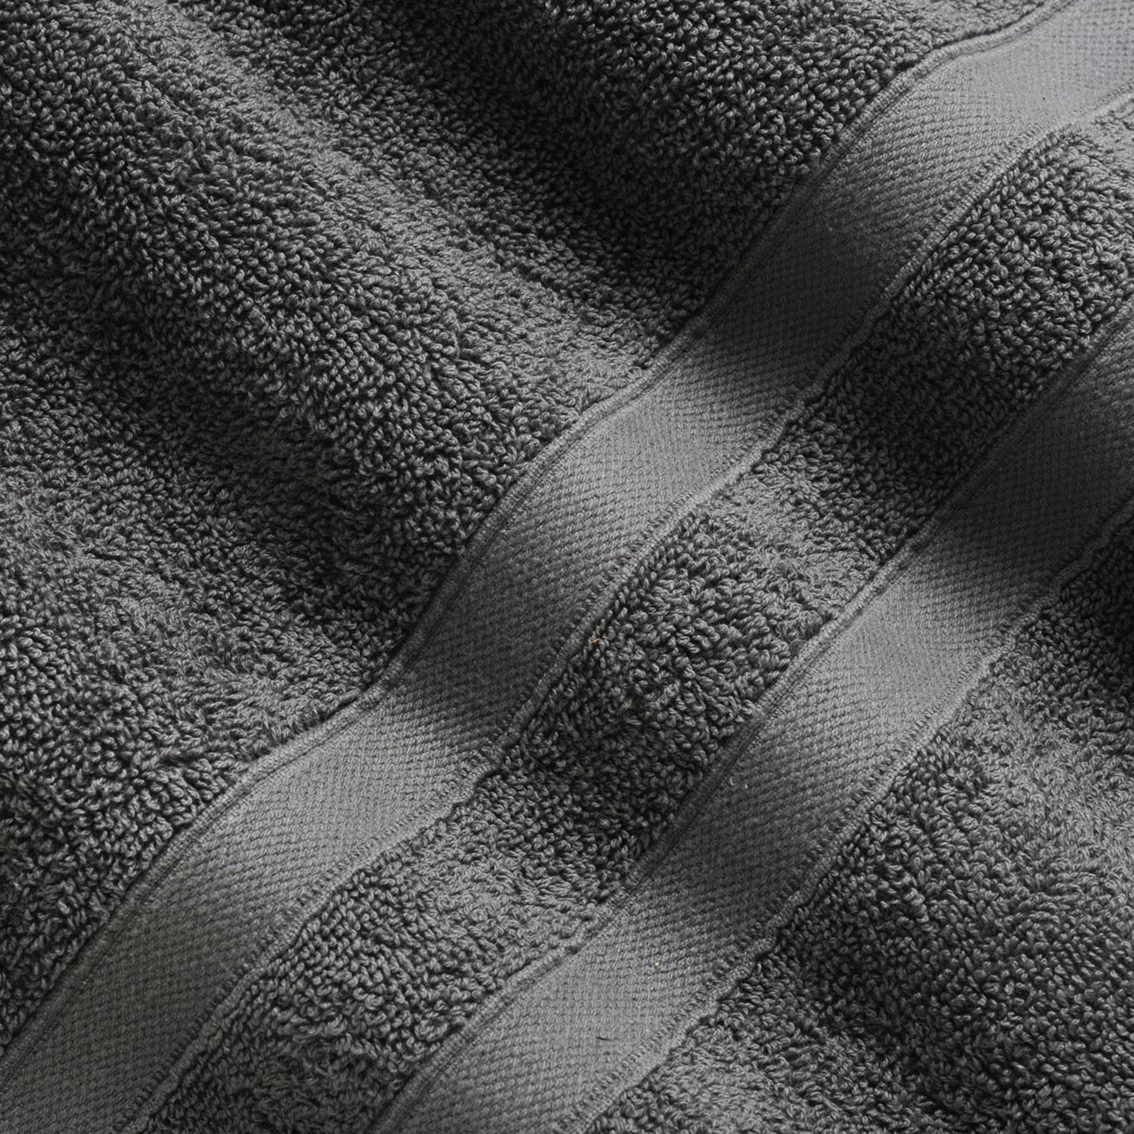 Bibb Home 6 pc. Oversized Solid Towel Set - Image 4 of 4